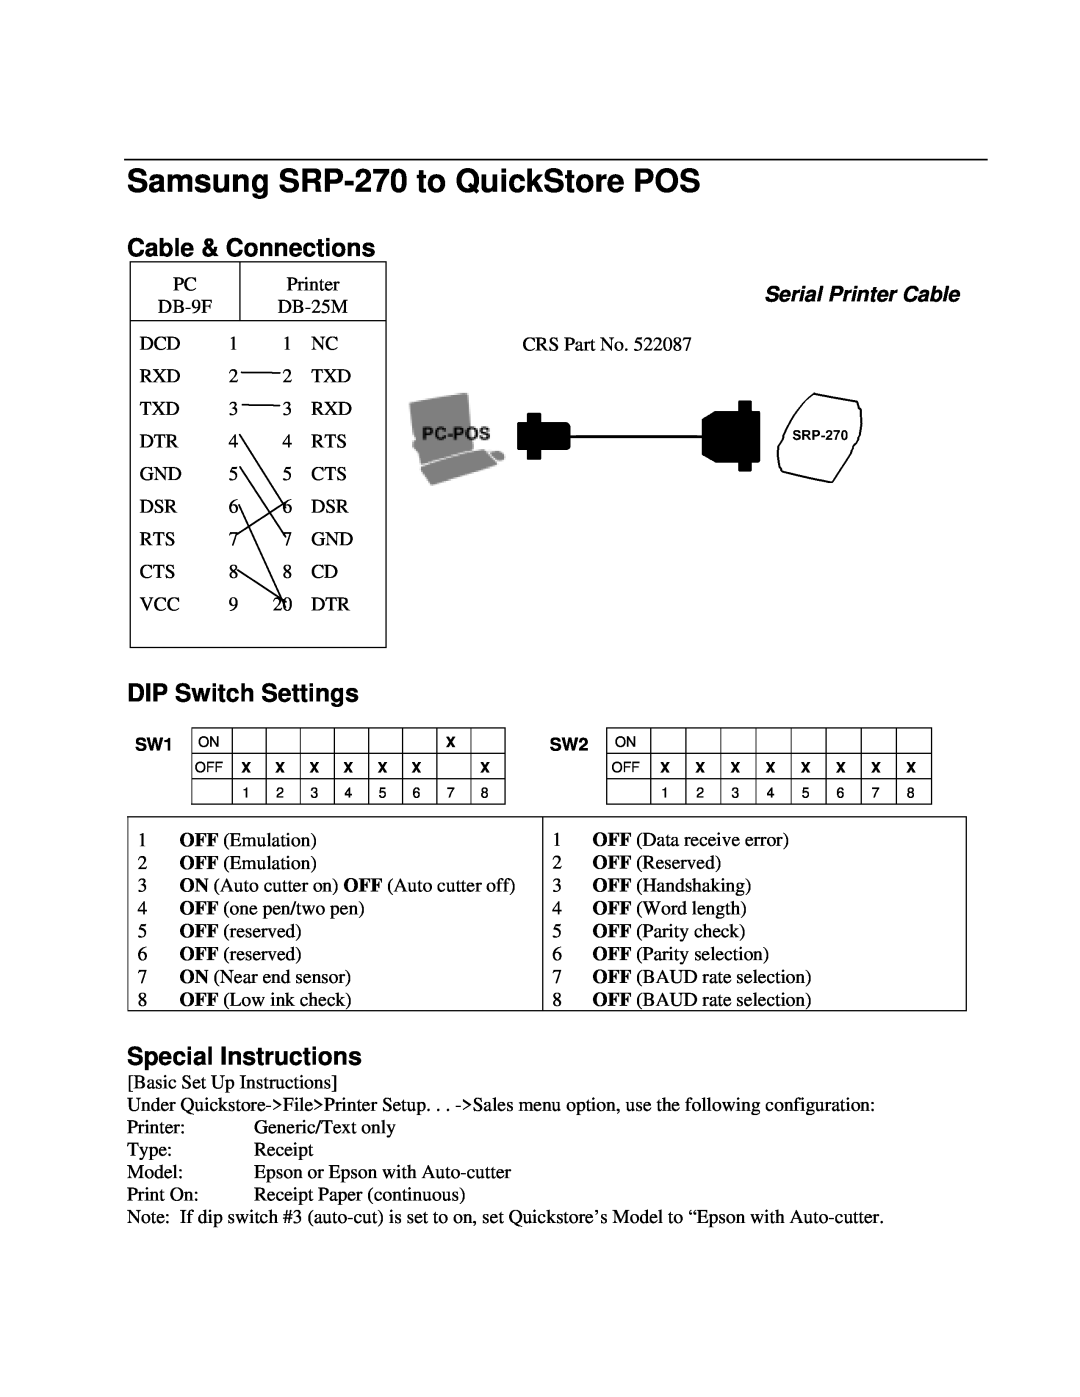 Samsung specifications Samsung SRP-270 Dot Matrix Receipt Printer, CRS, Inc, Integrator’s Manual, Contents, Cash Drawer 